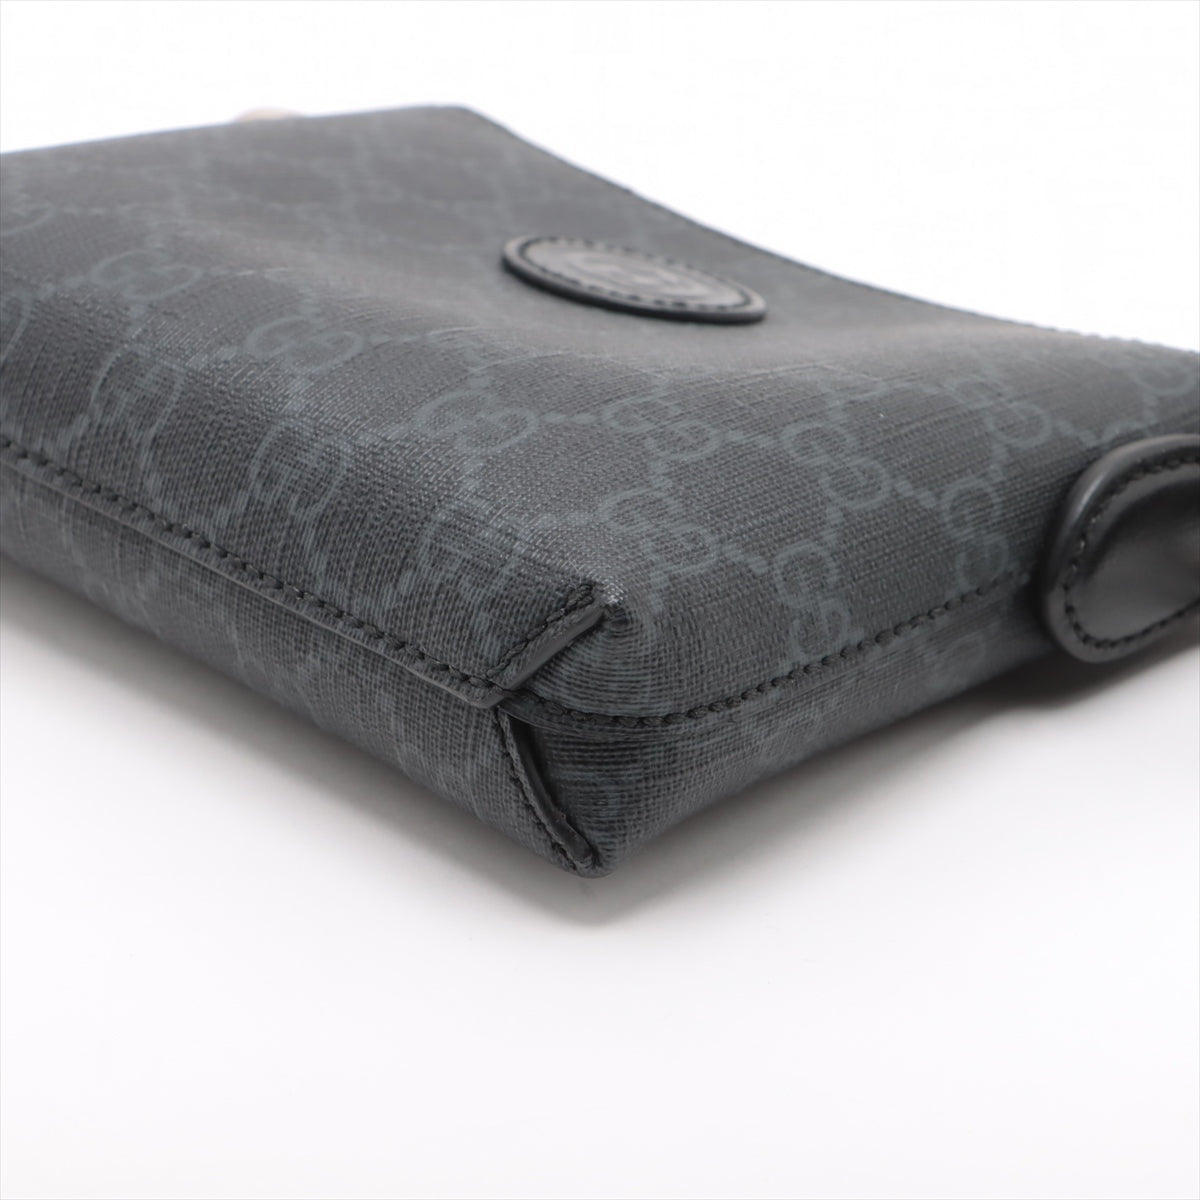 Gucci Interlocking G PVC & leather Shoulder bag Black 723306